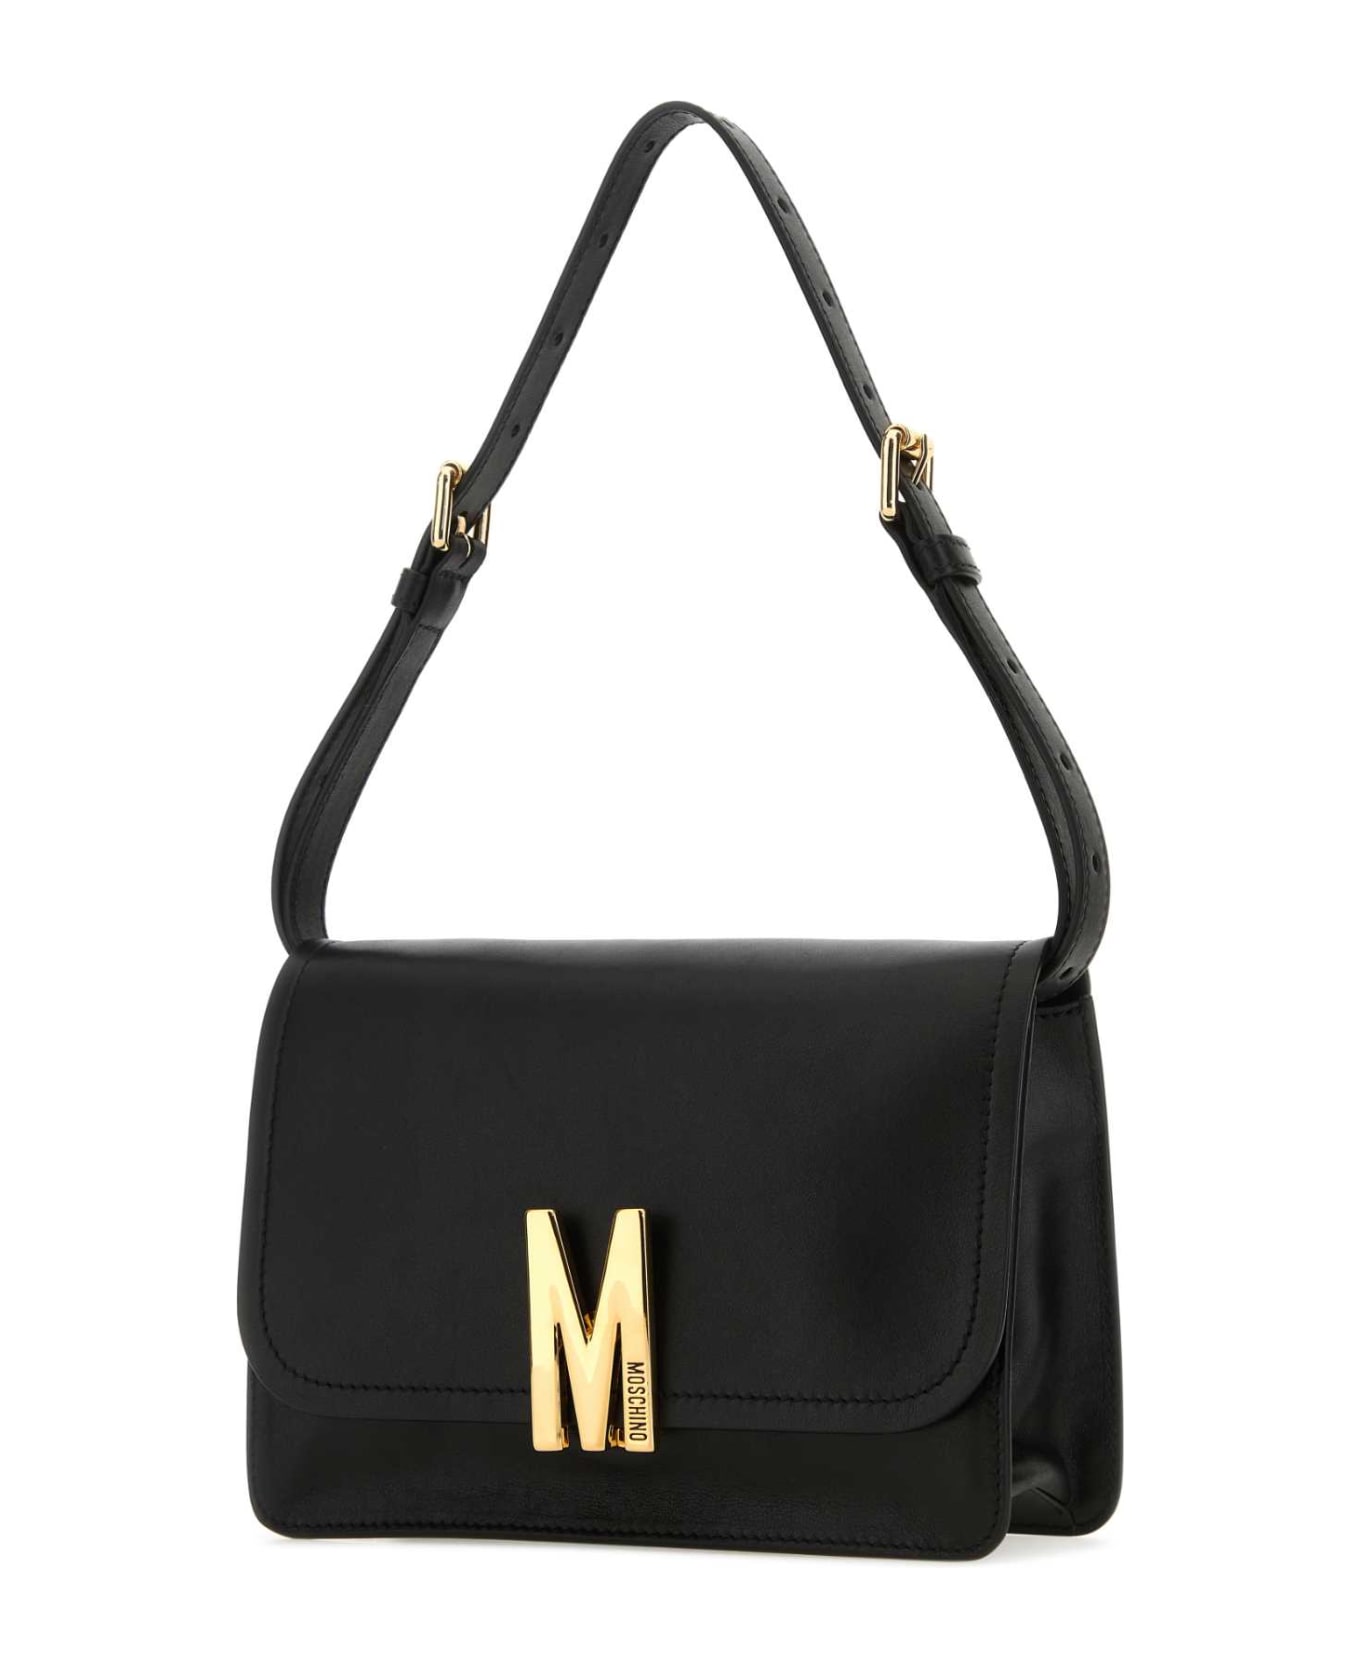 Moschino Black Leather M Bag Shoulder Bag - 0555 ショルダーバッグ